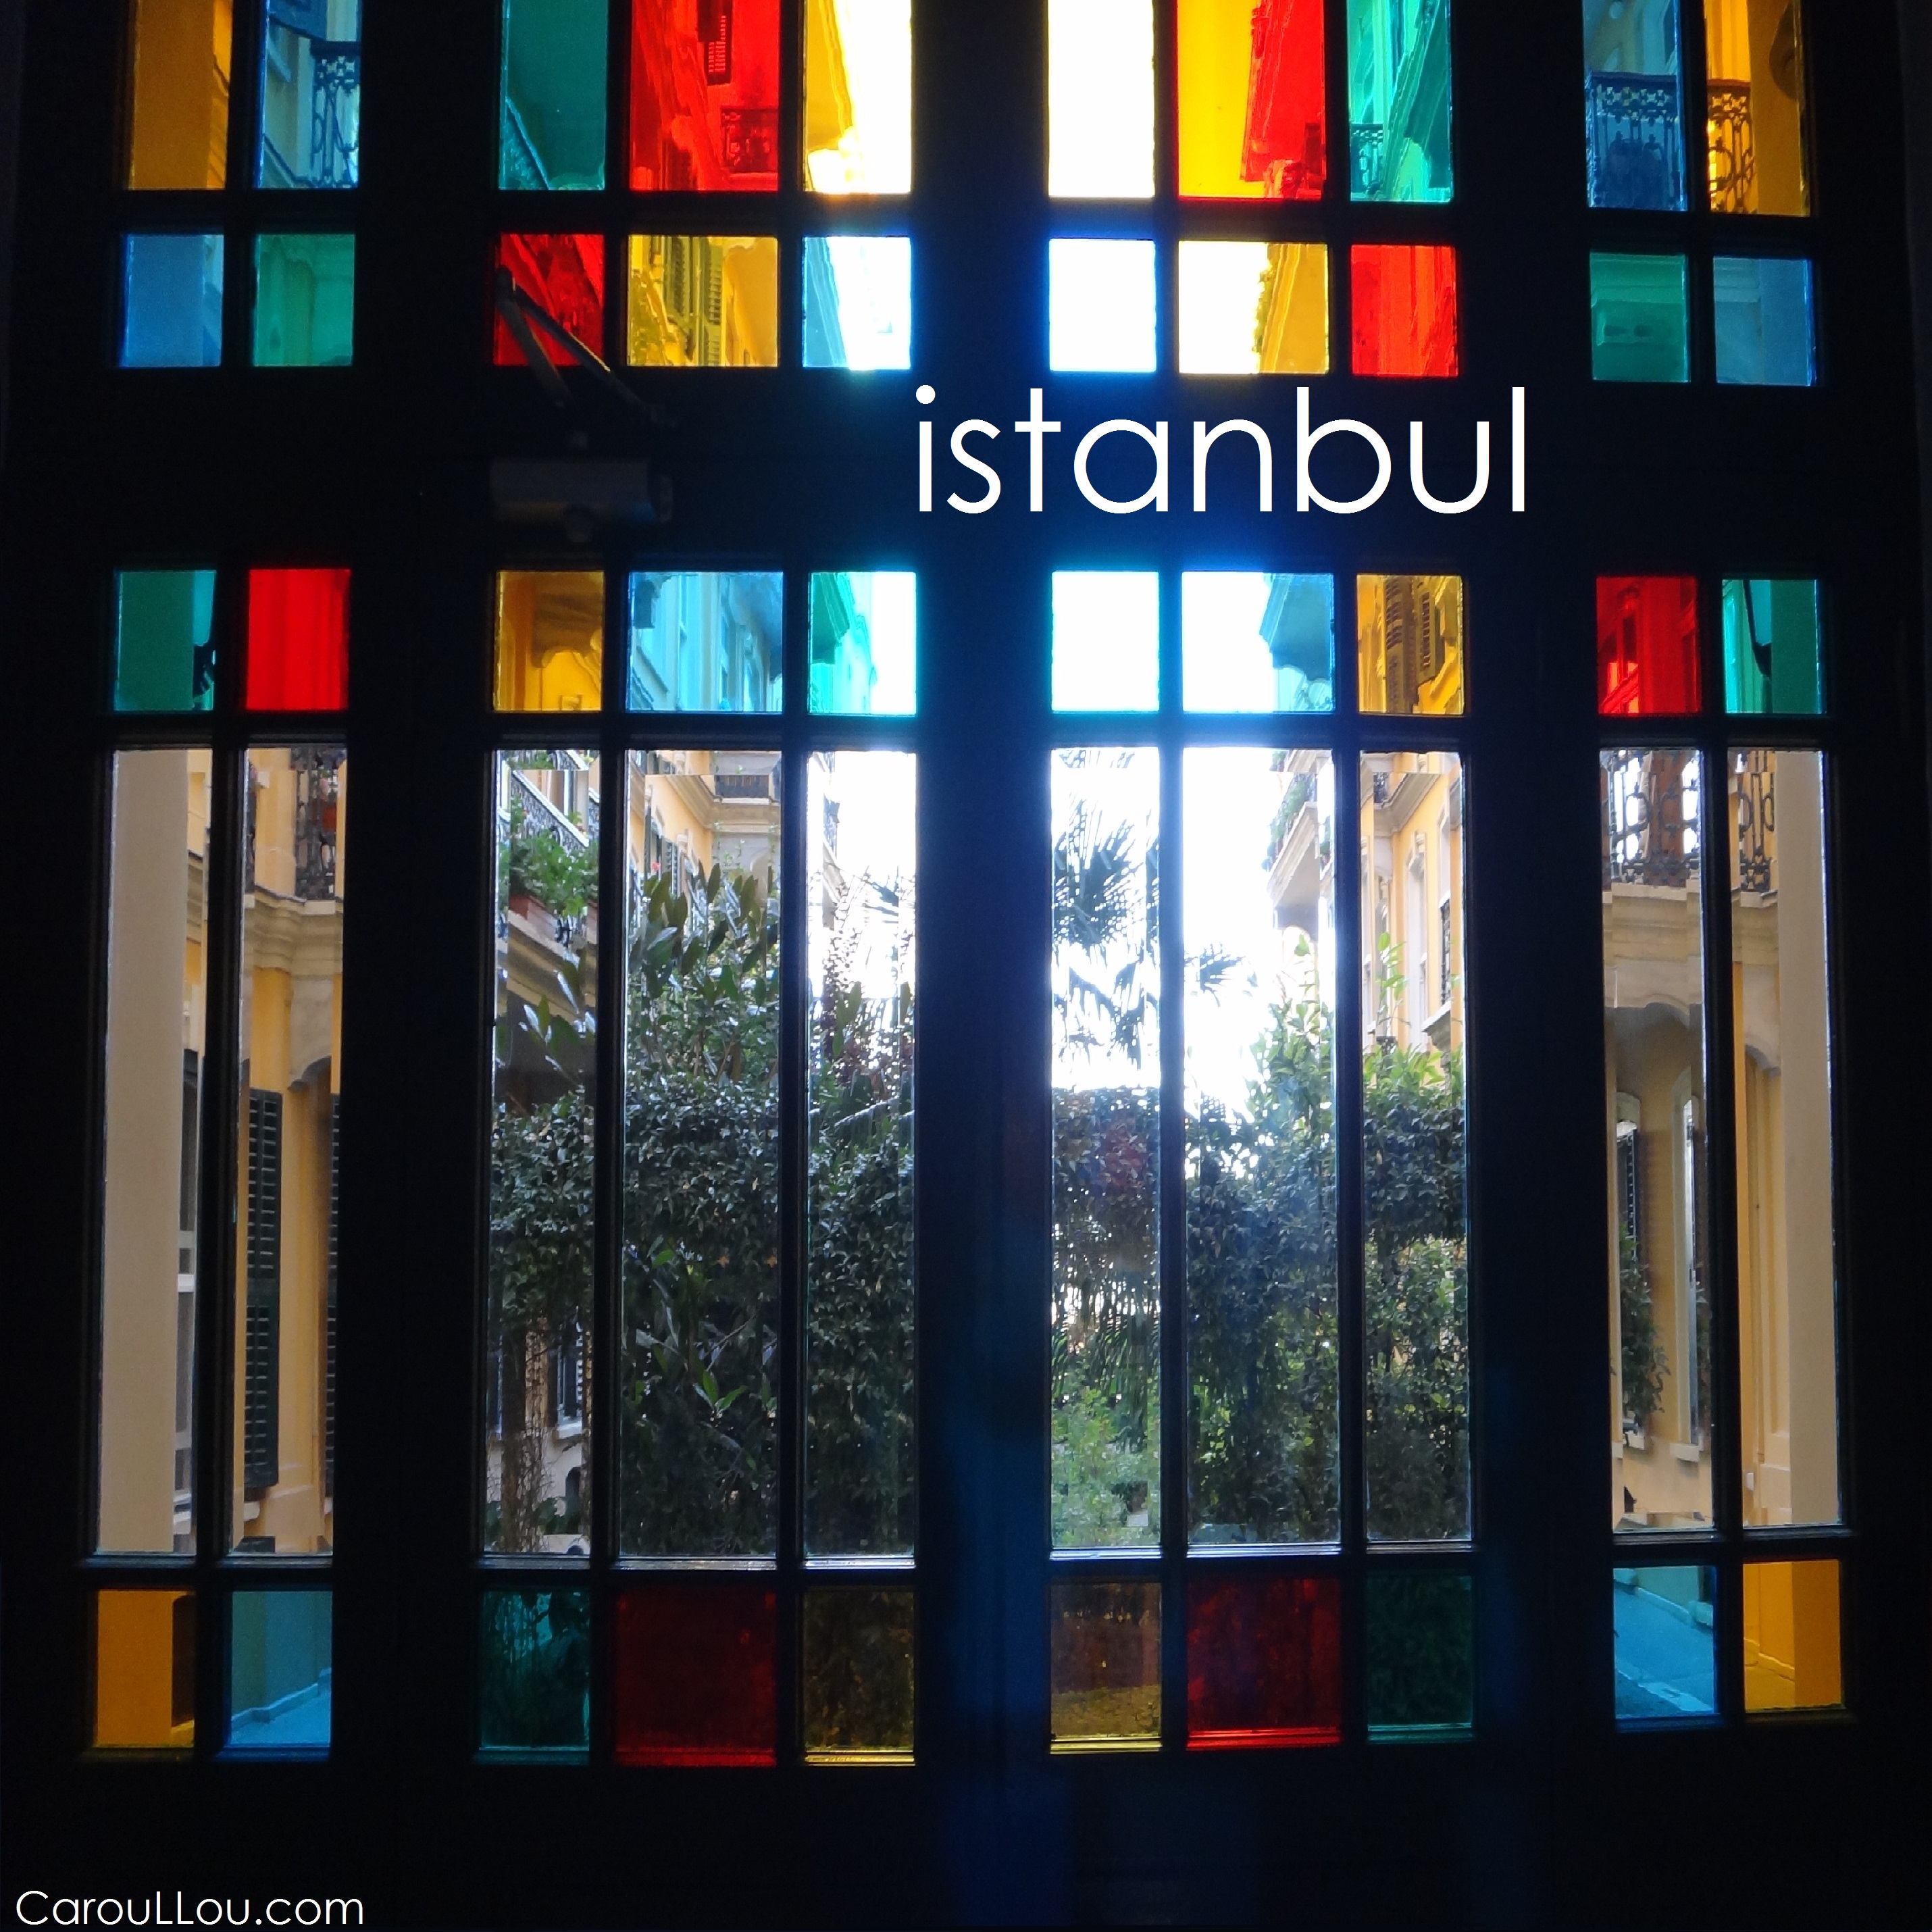 CarouLLou.com Carou LLou in Istanbul Turkey doors colors +-